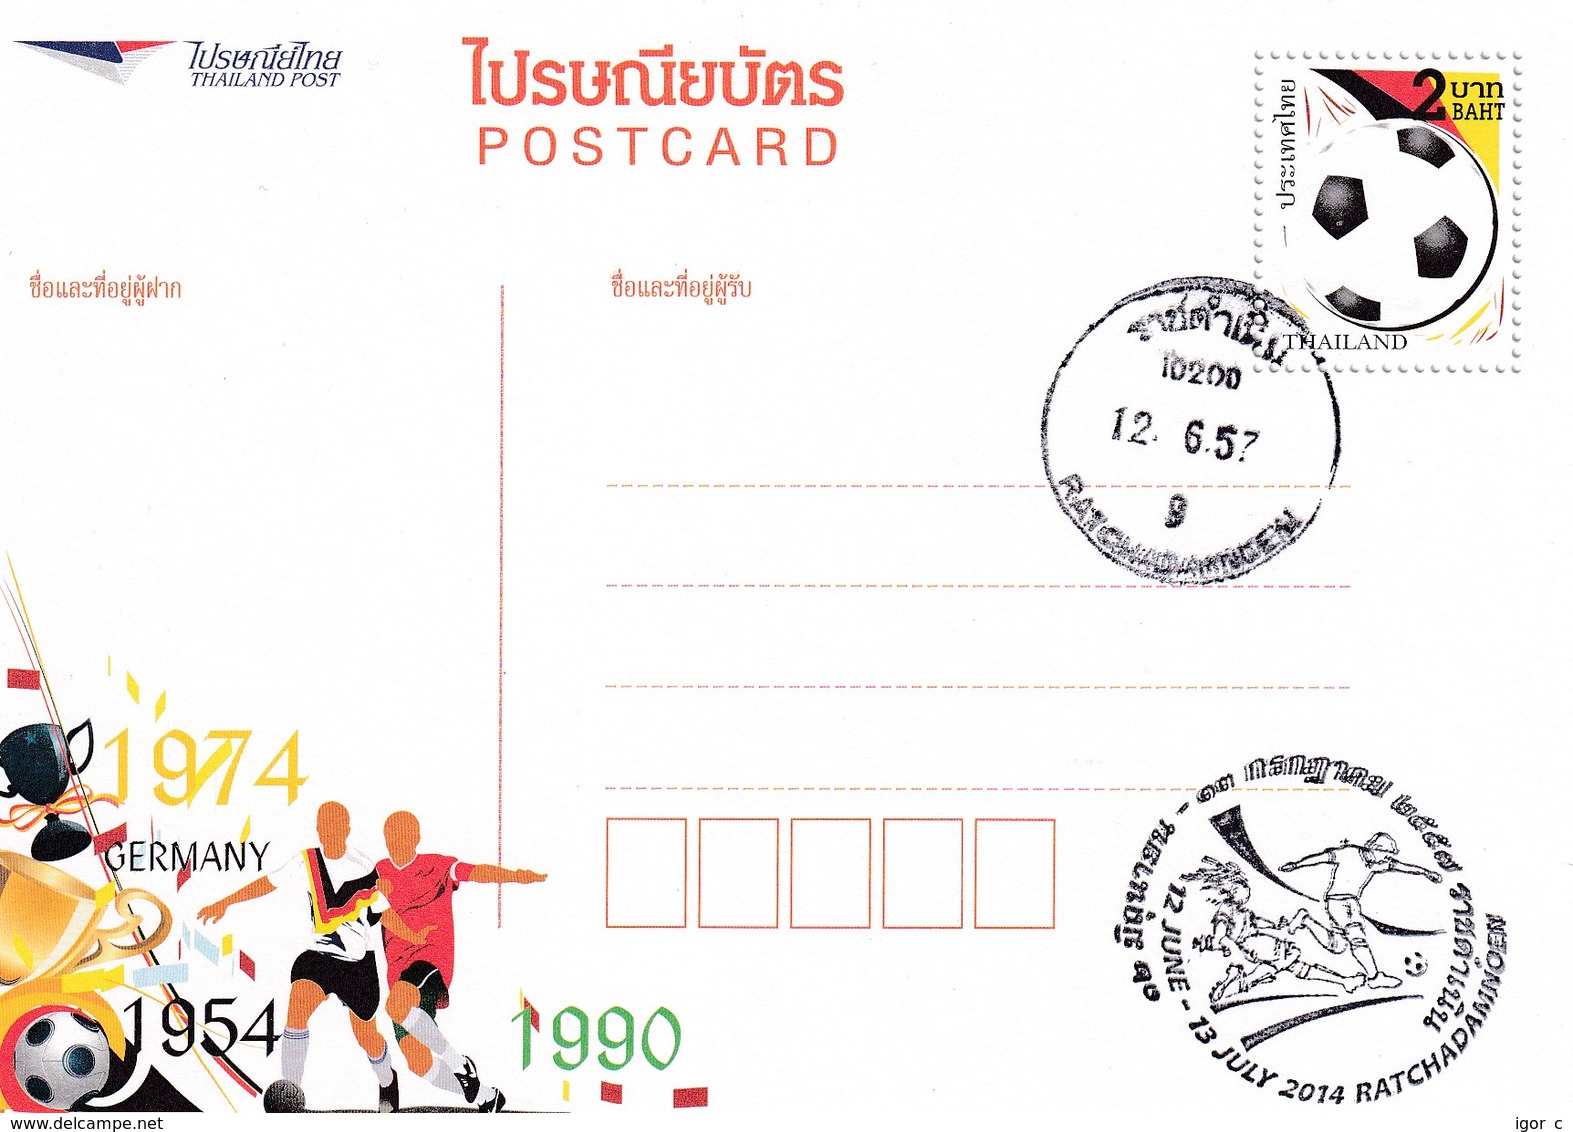 Thailand 2014 Postal Stationery Card: Football Fussball Soccer Calcio; FIFA World Cup 1954 1974 1990 Germany Champion - 1954 – Schweiz